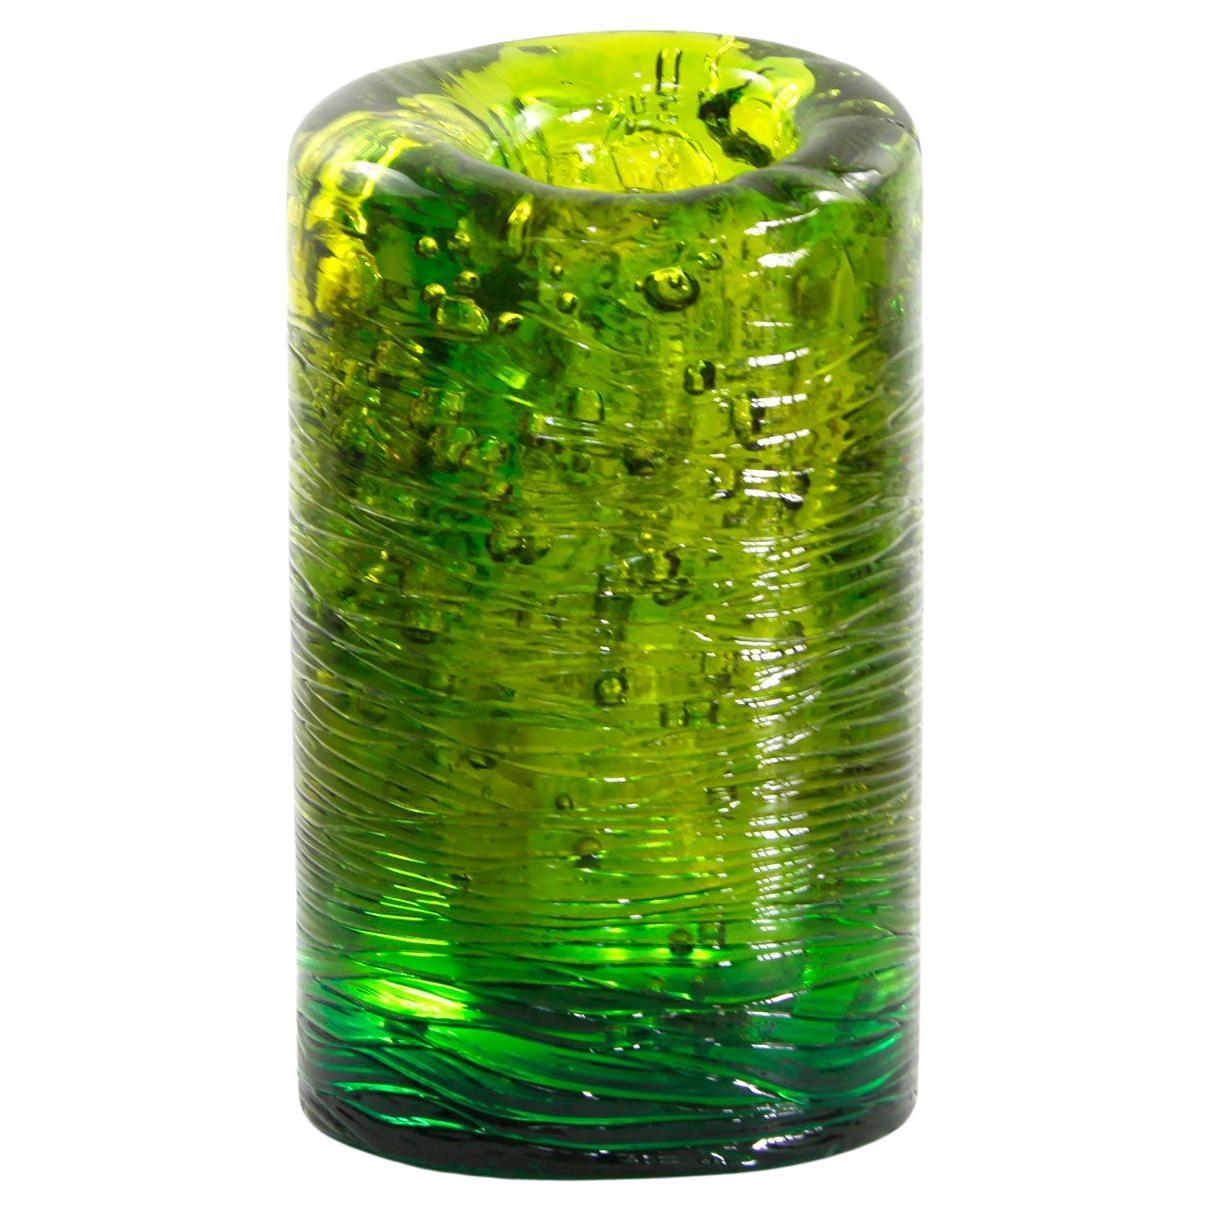 Grand vase contemporain Jungle, en vert citron monochrome, de Jacopo Foggini